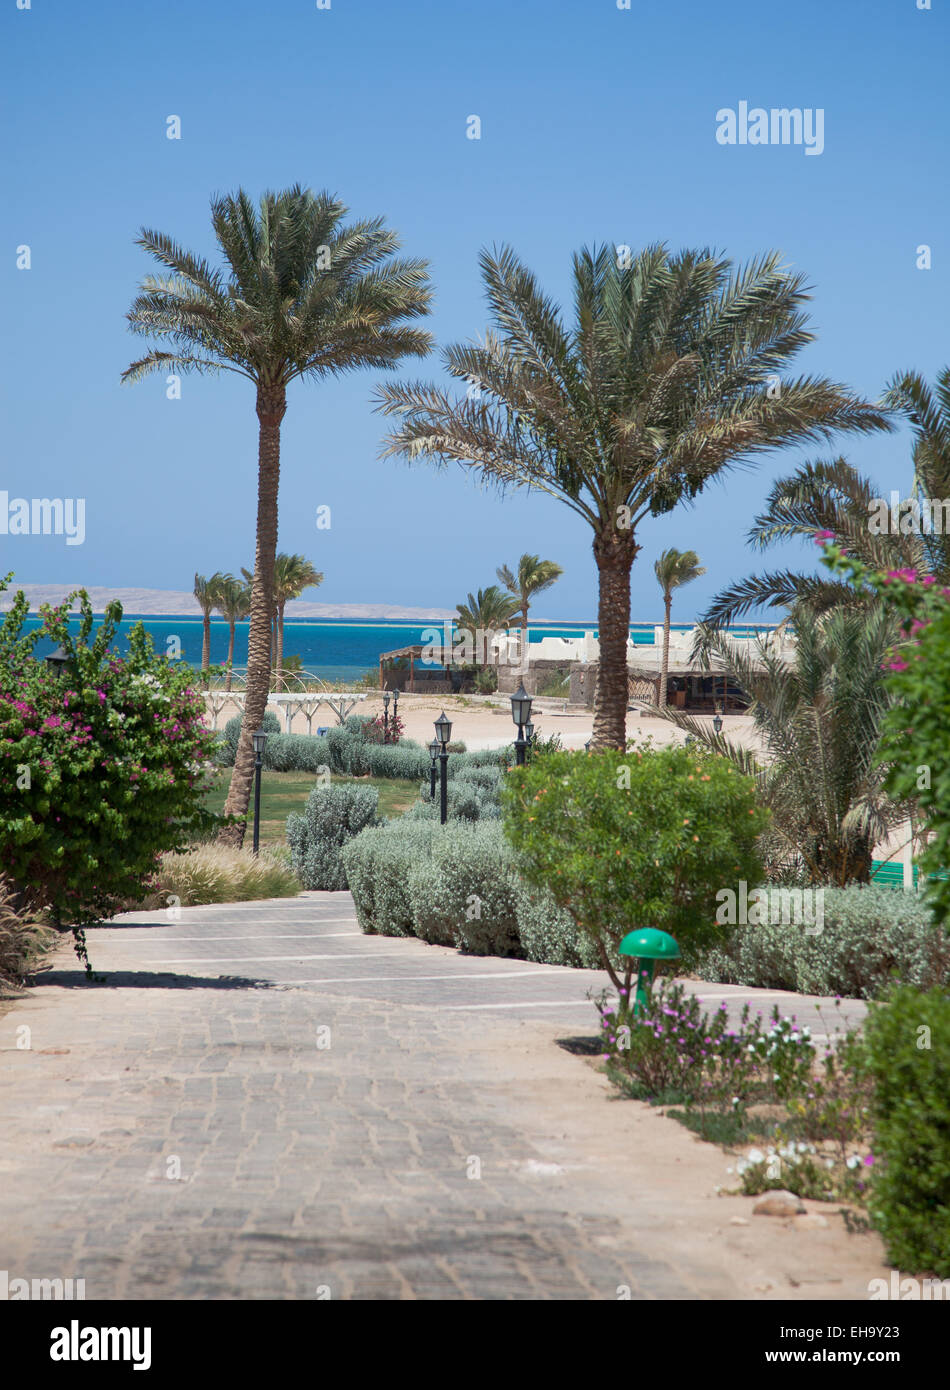 Beach at sunny day at Hurghada, Egypt Stock Photo